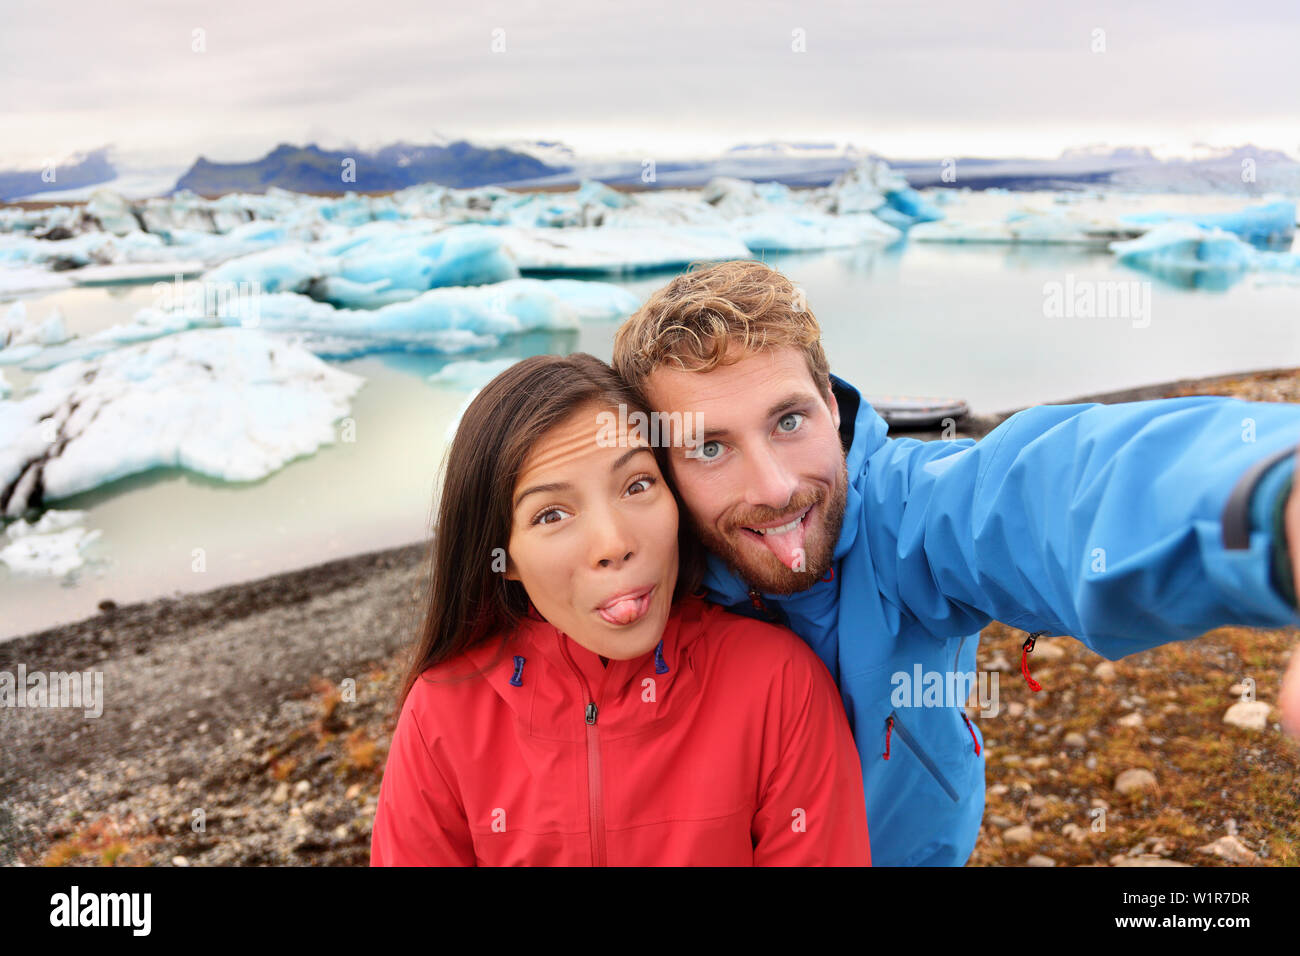 Funny selfie couple taking self portrait photograph on Iceland having fun on travel by Jokulsarlon glacial lagoon / glacier lake. Tourists enjoying beautiful Icelandic nature landscape Vatnajokull. Stock Photo